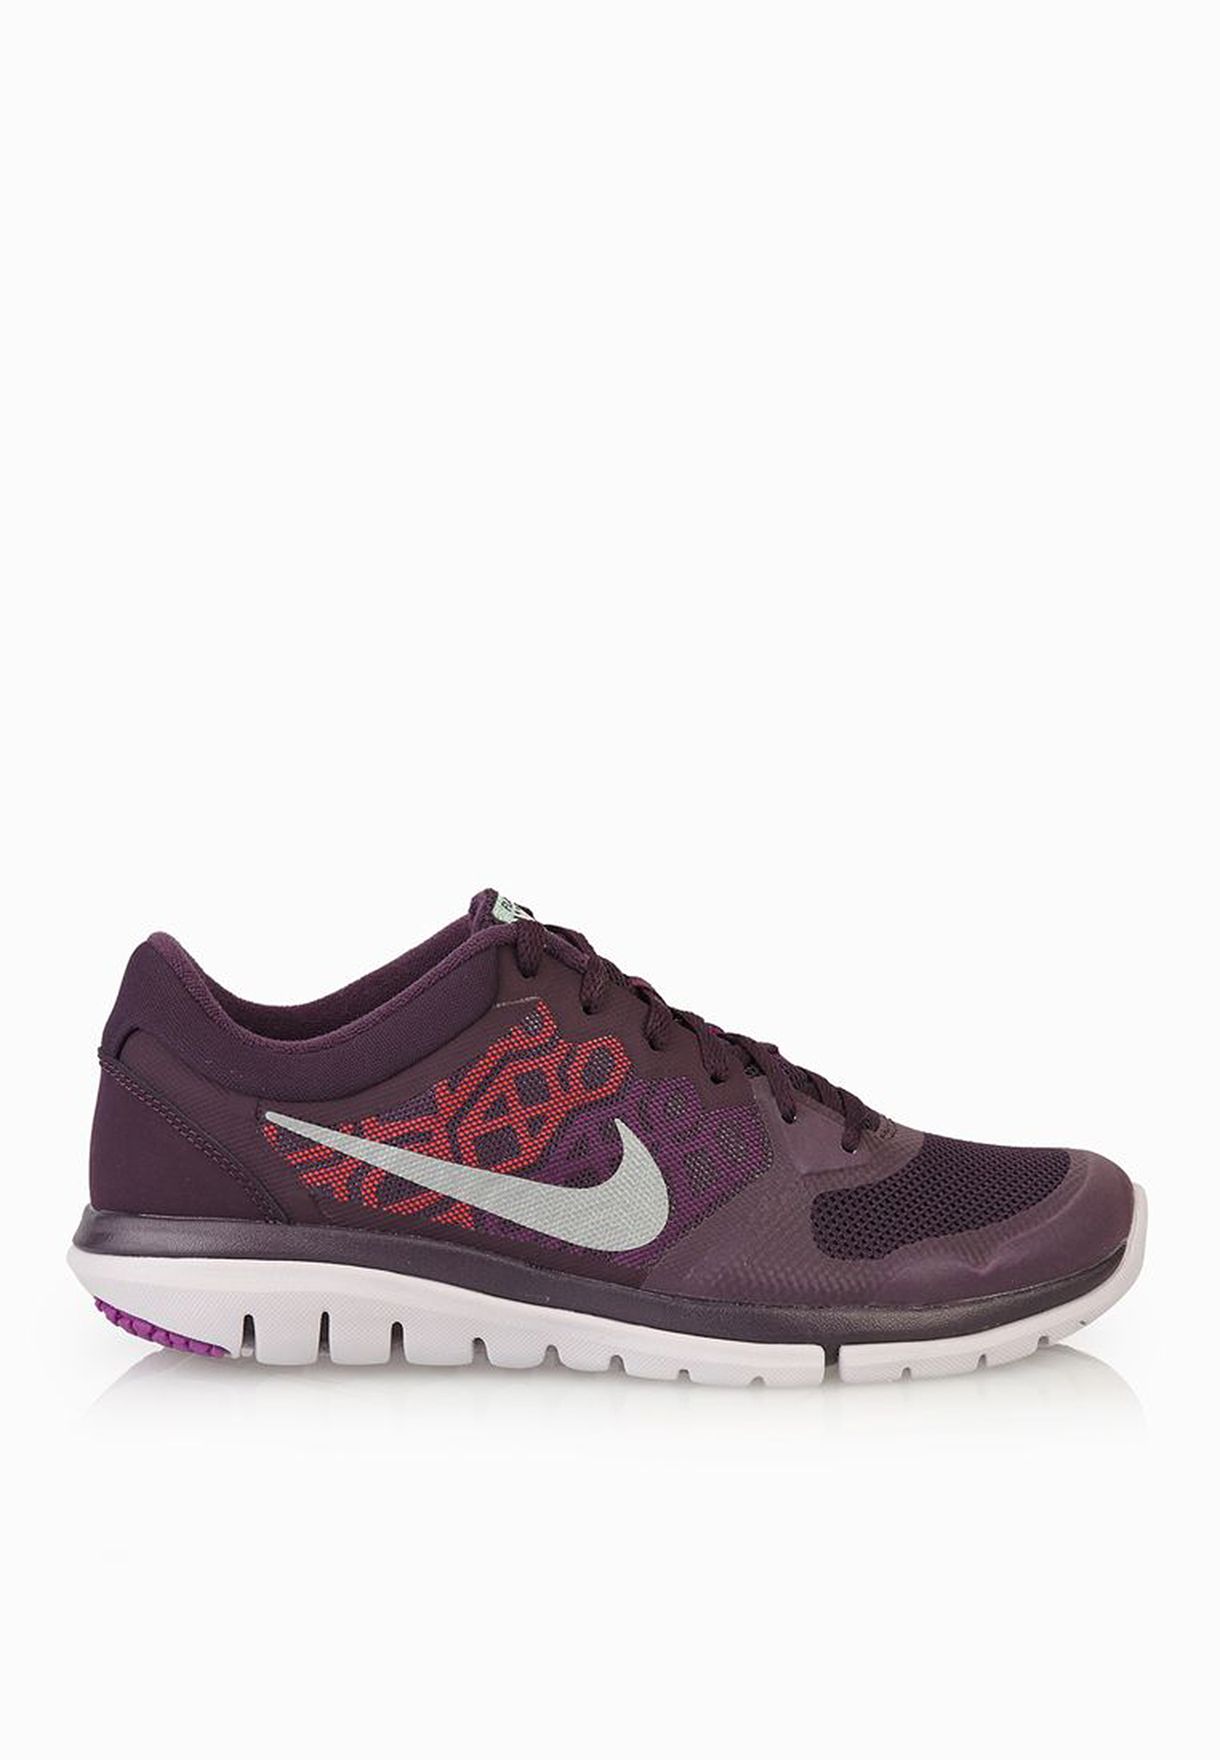 Obsesión cometer Aprendiz Buy Nike purple Flex 2015 Rn Flash for Women in MENA, Worldwide